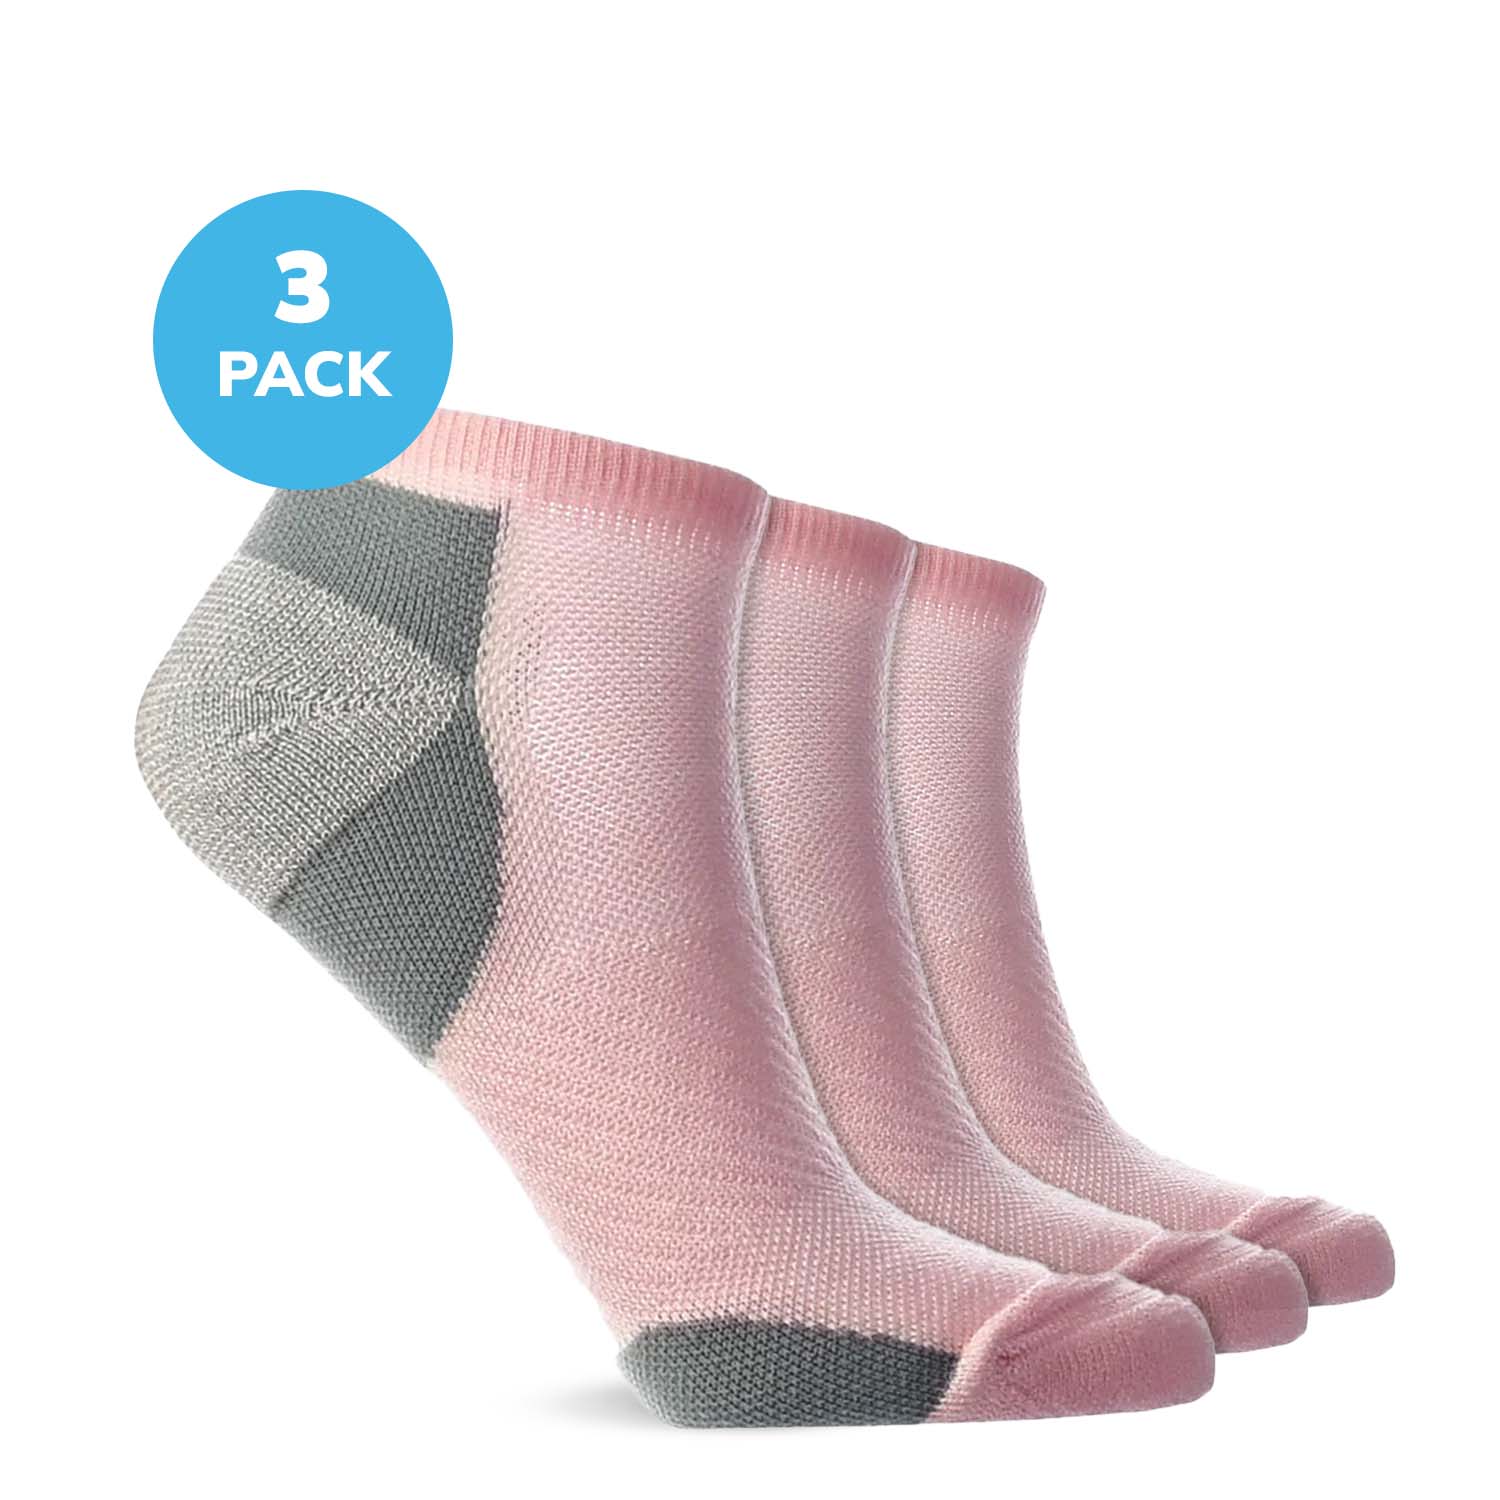 Compression Low Cut Ankle Socks (10-20 mmHg)